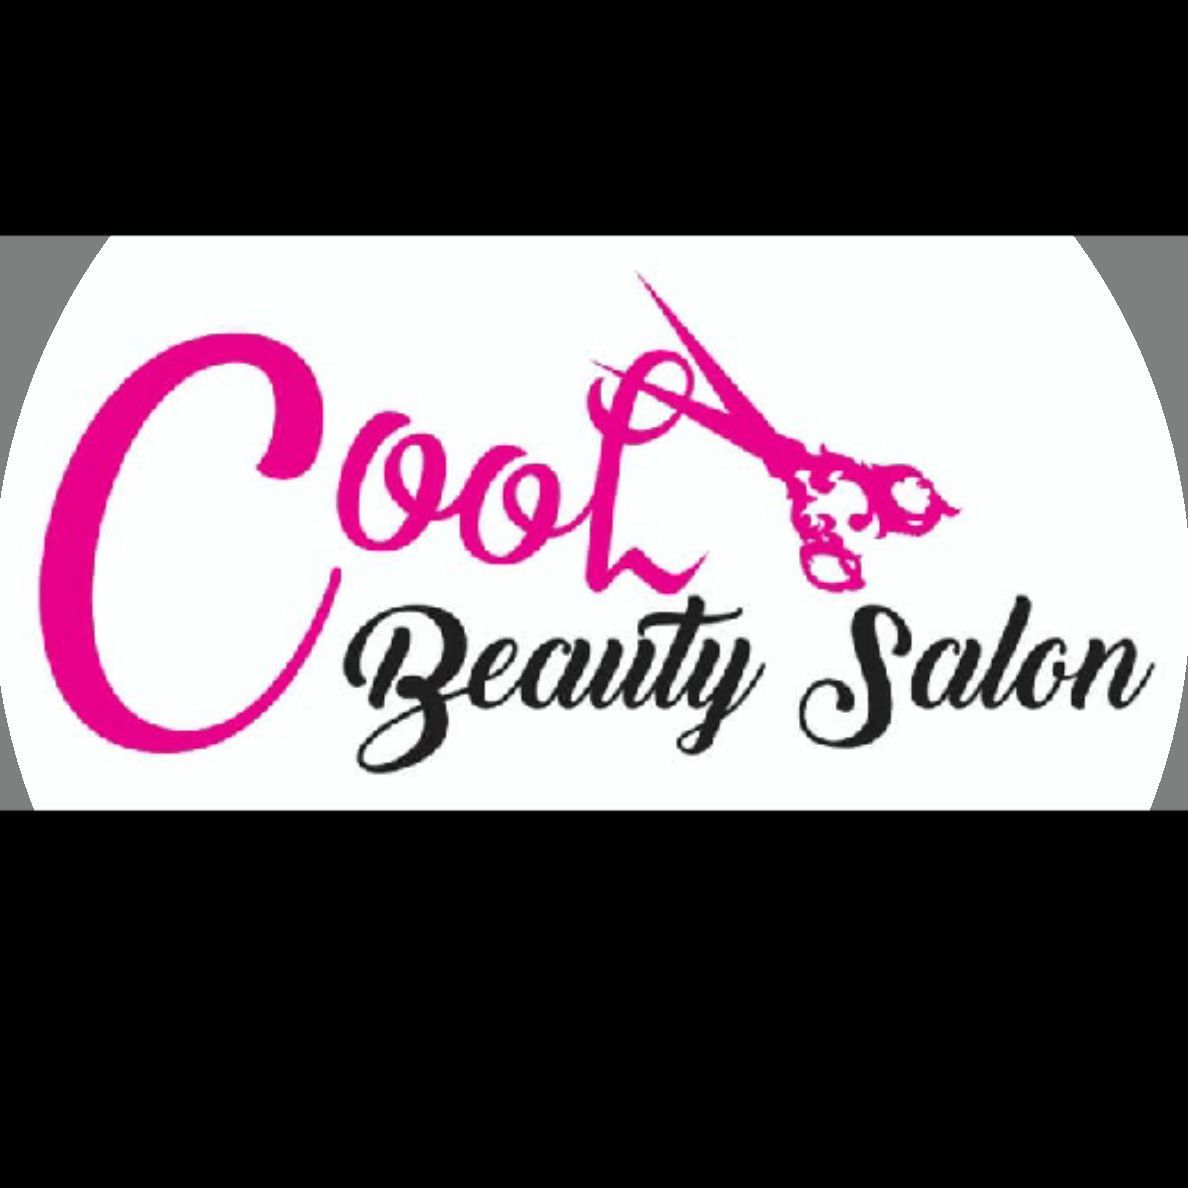 Cool Beauty Salón 1 - Cool Beauty salon